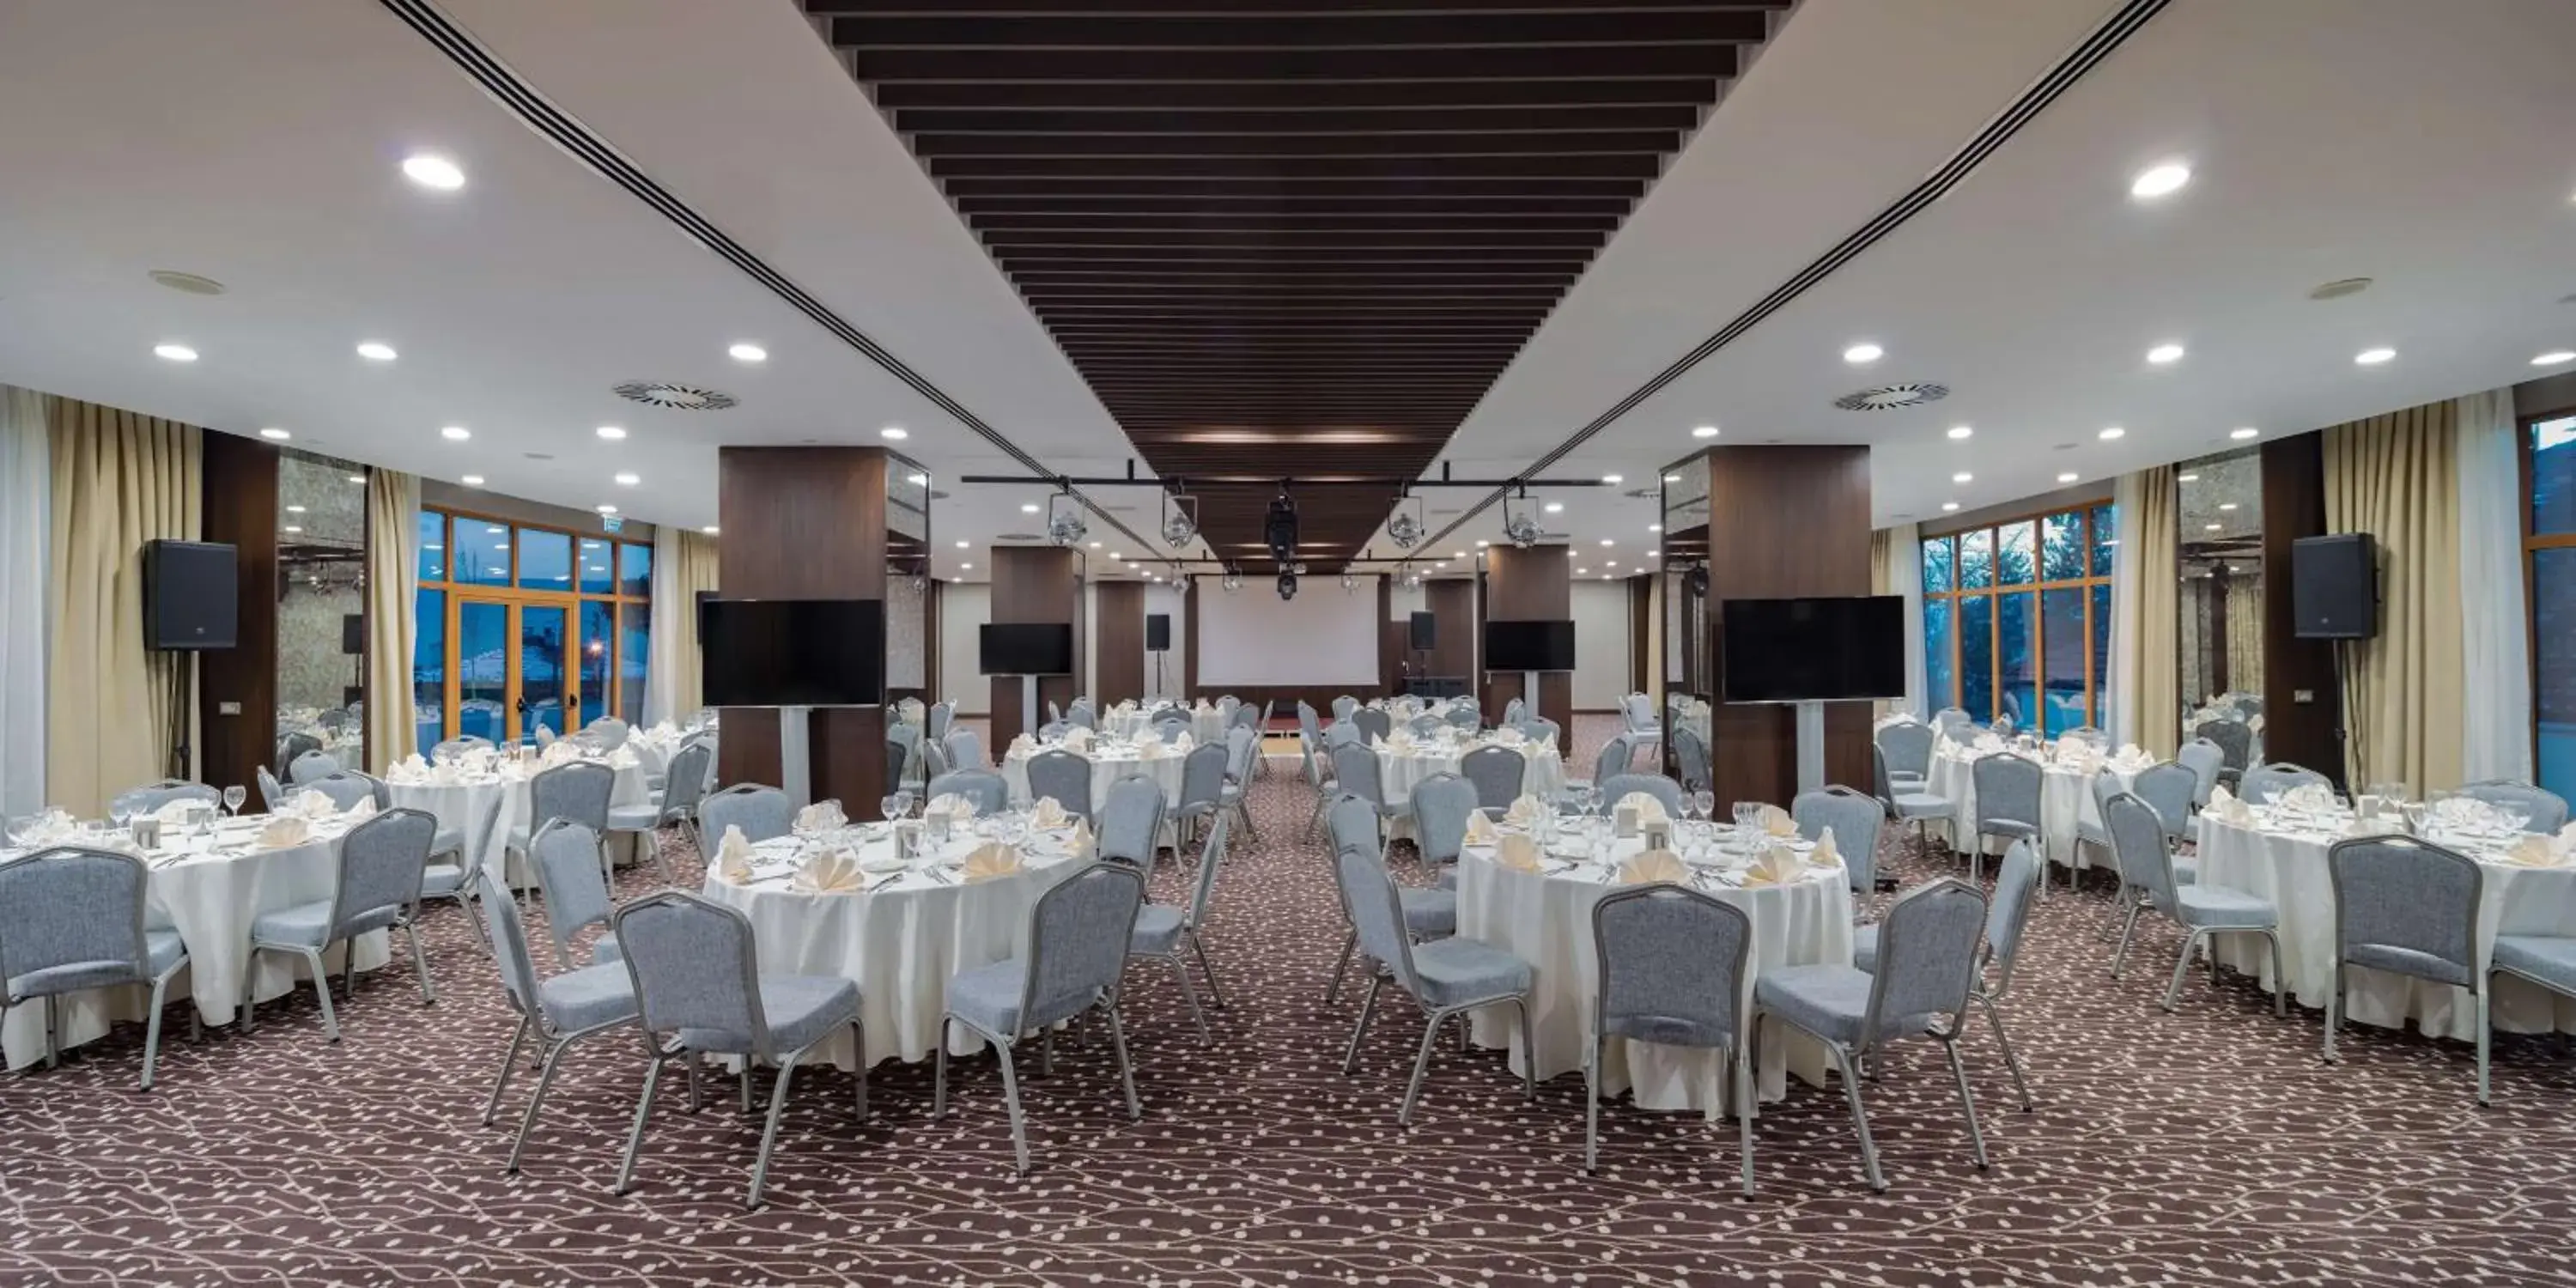 Meeting/conference room, Banquet Facilities in Hilton Garden Inn Safranbolu